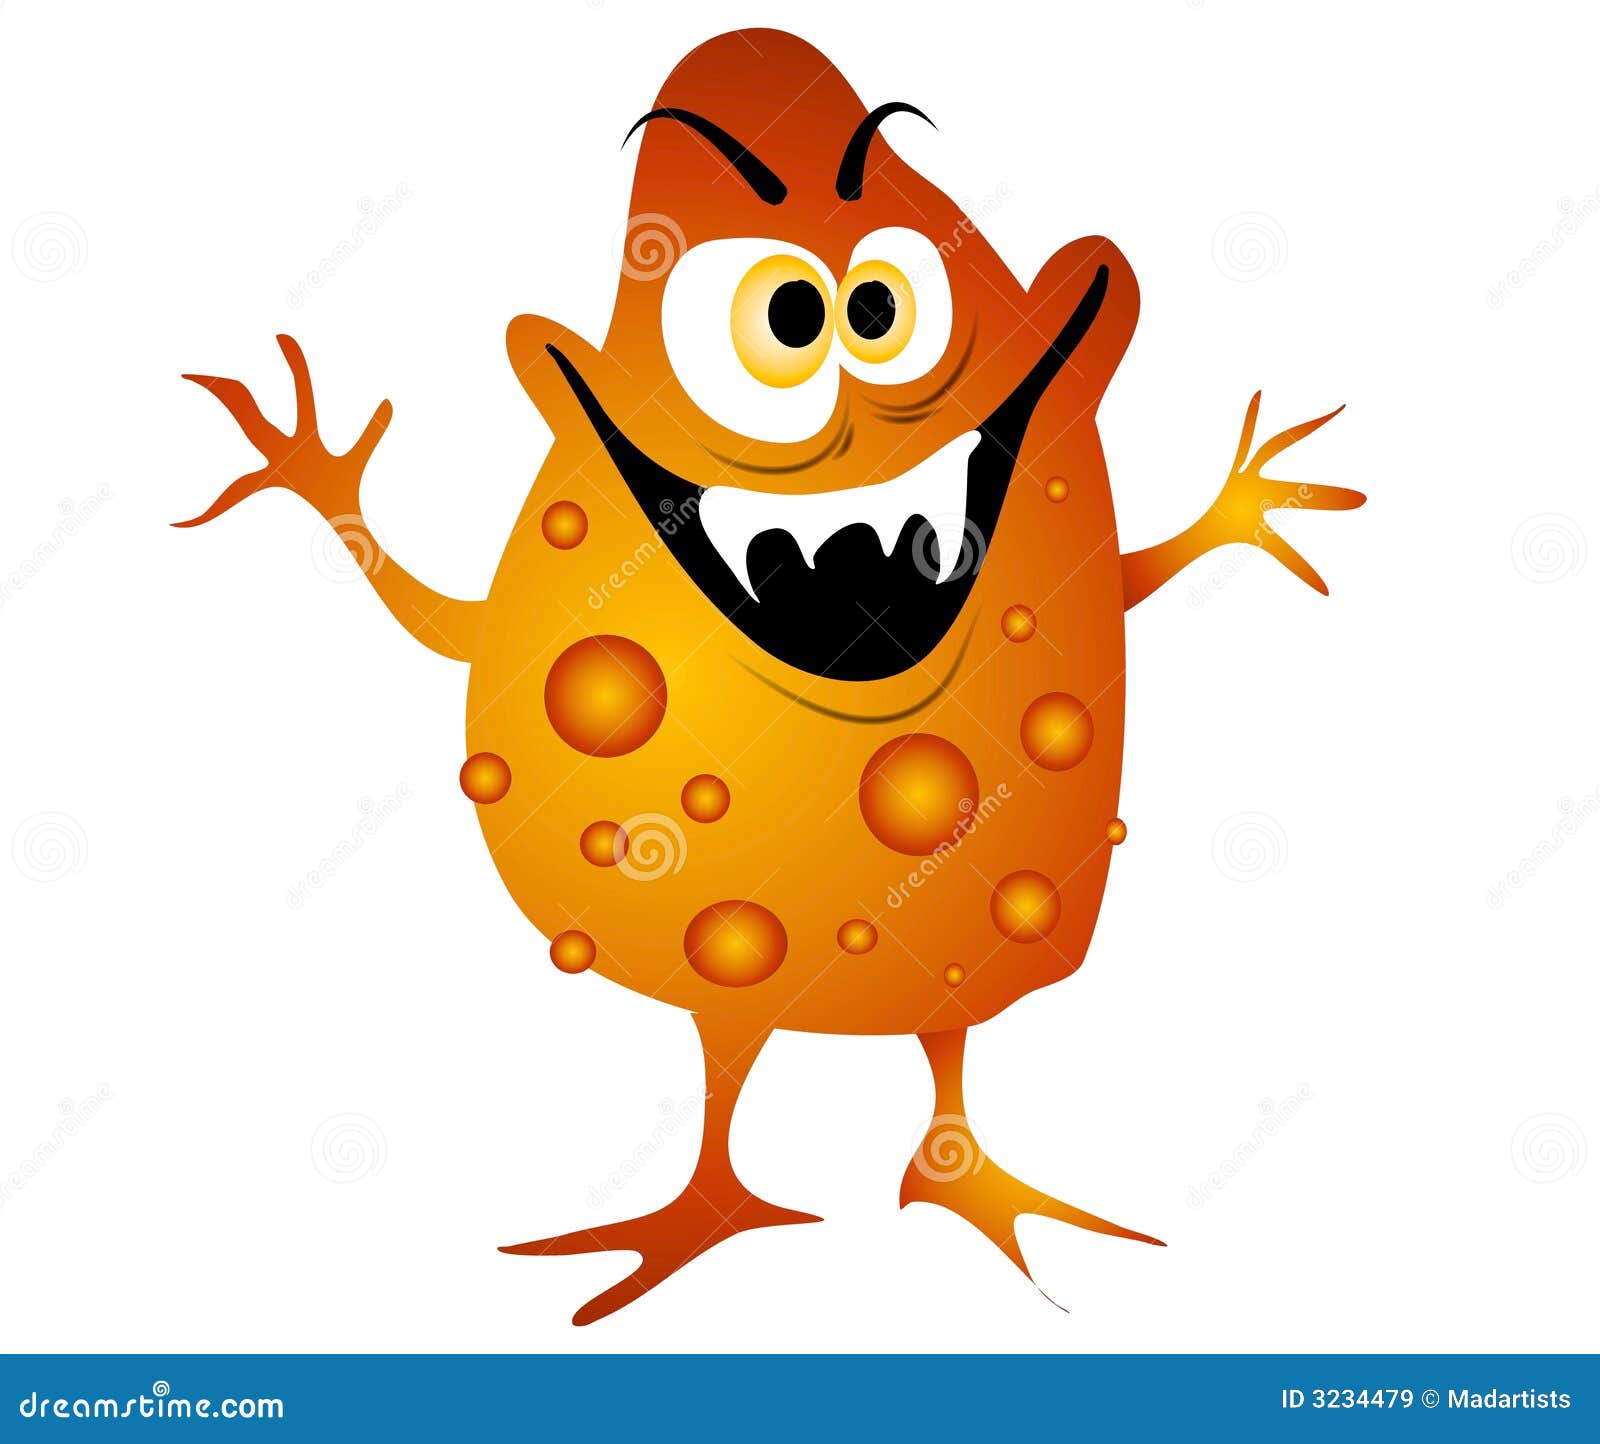 cartoon virus germ or bacteria